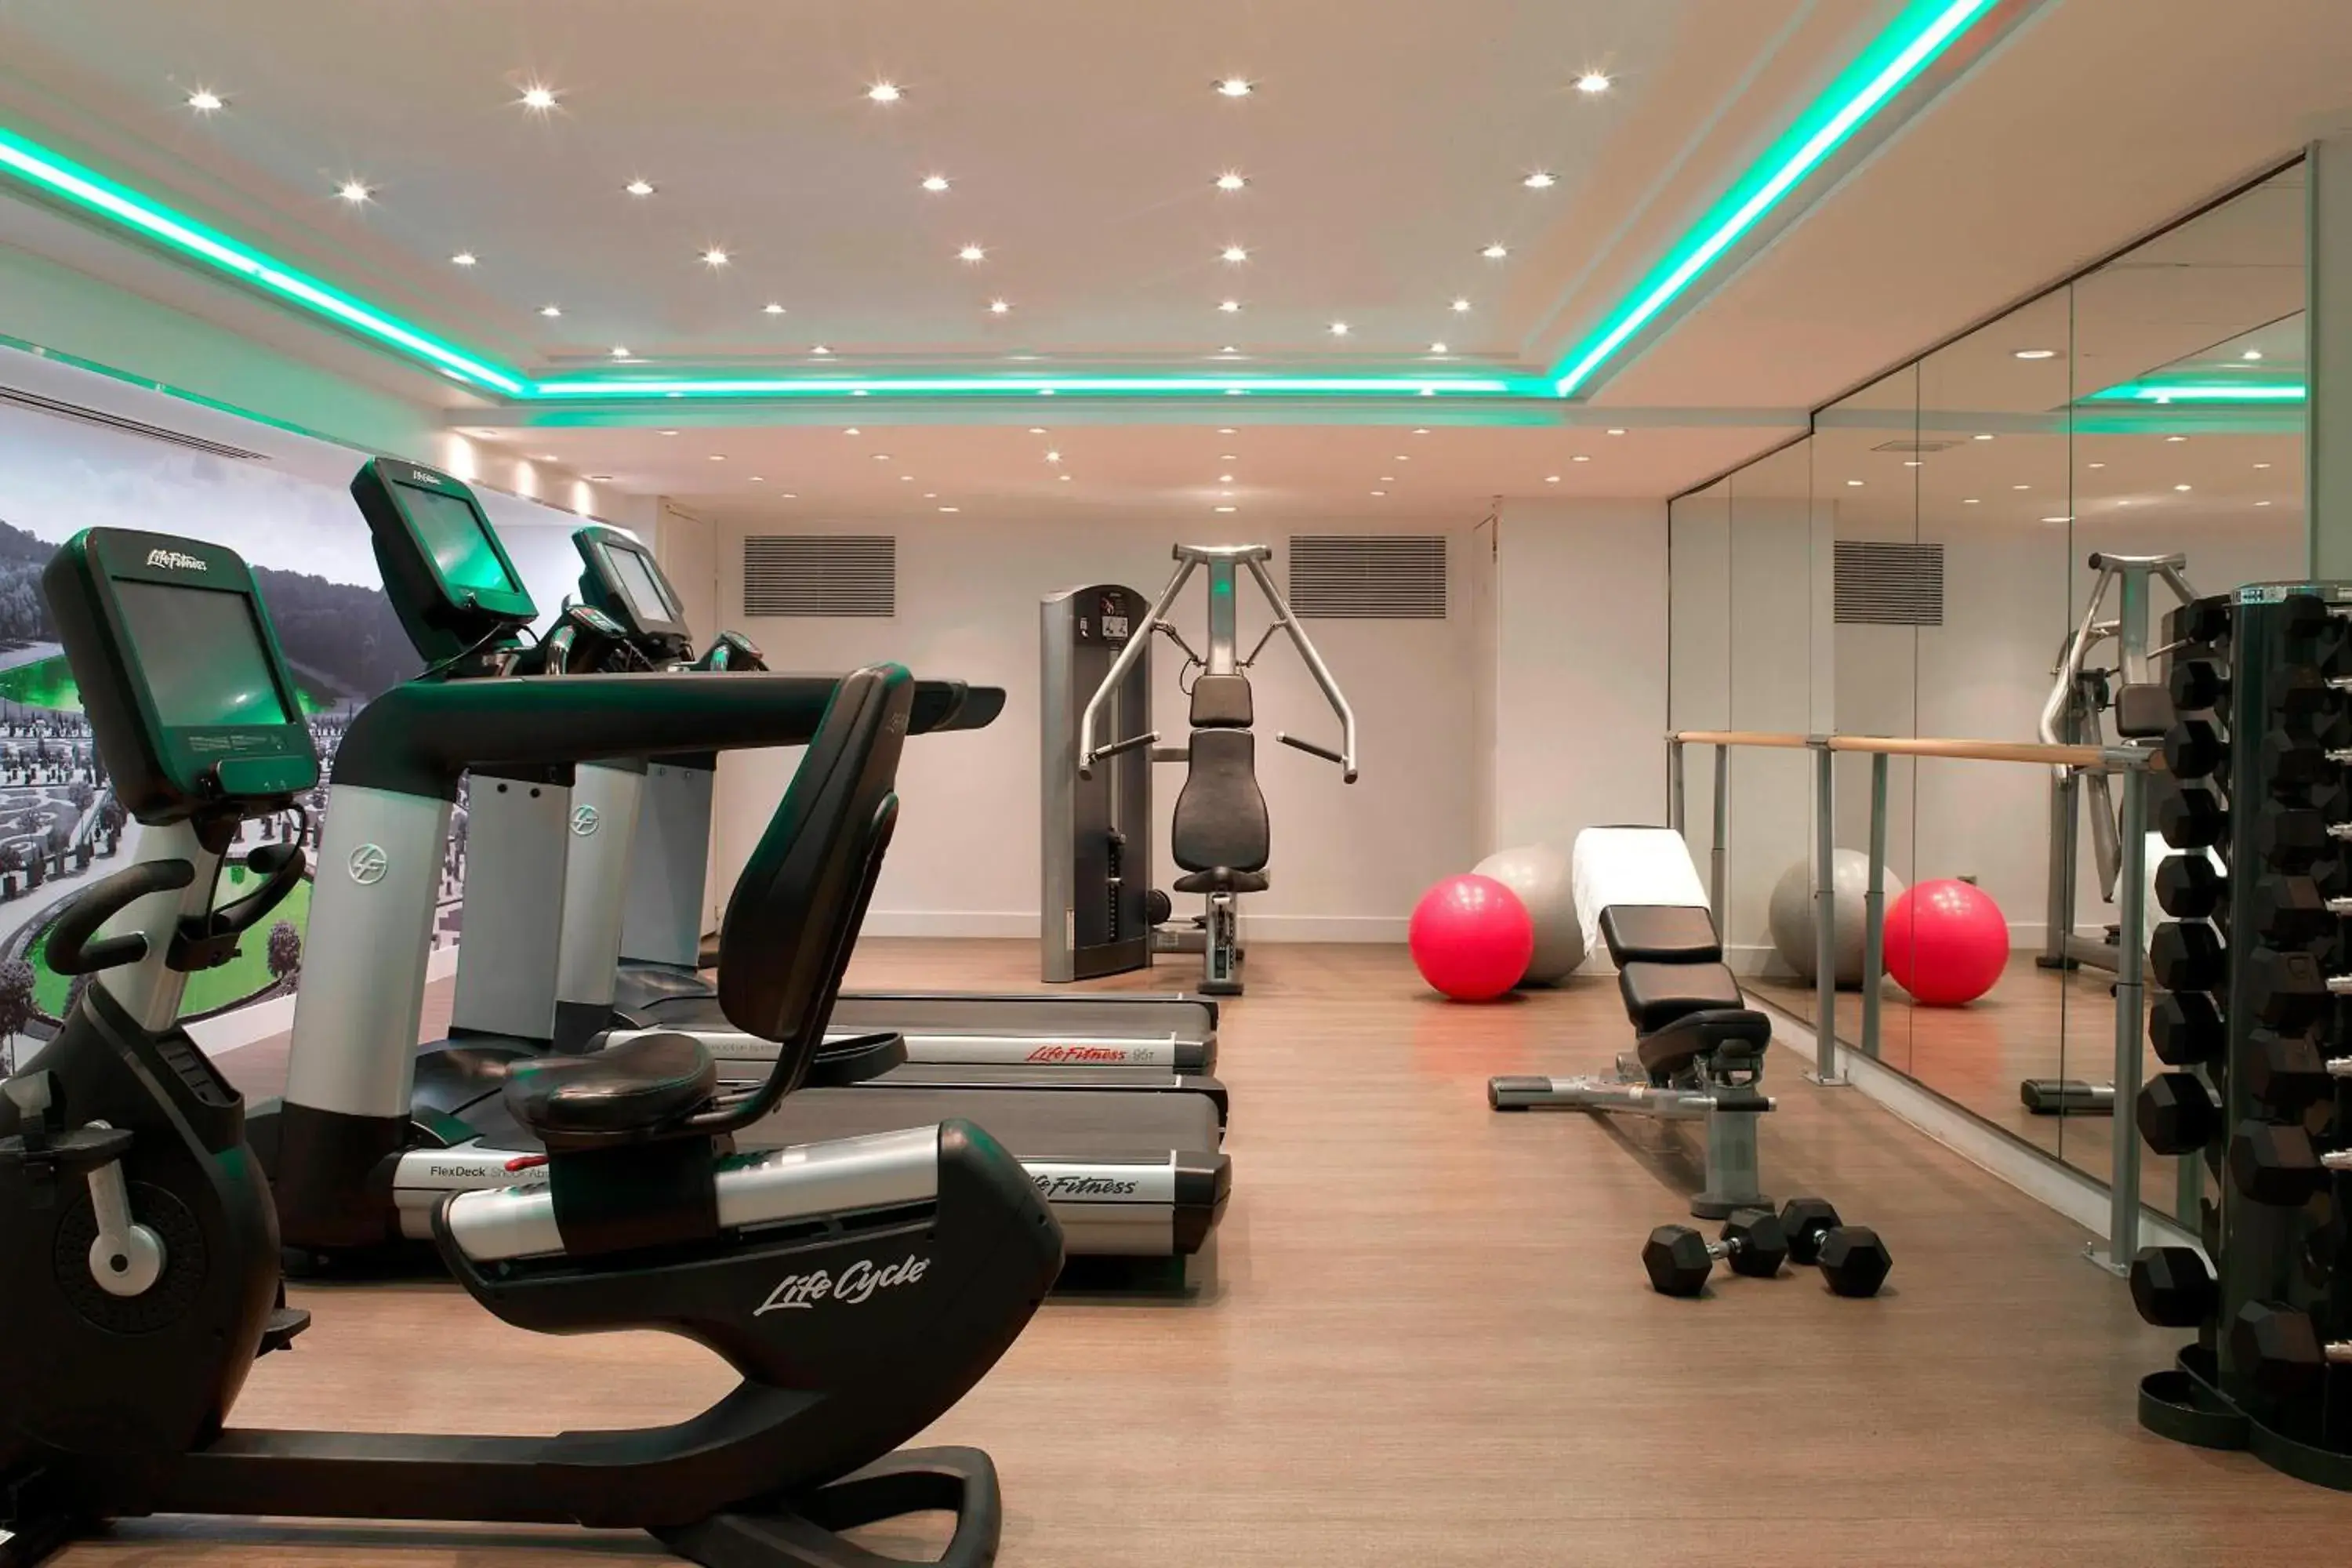 Fitness centre/facilities, Fitness Center/Facilities in Renaissance Paris Nobel Tour Eiffel Hotel